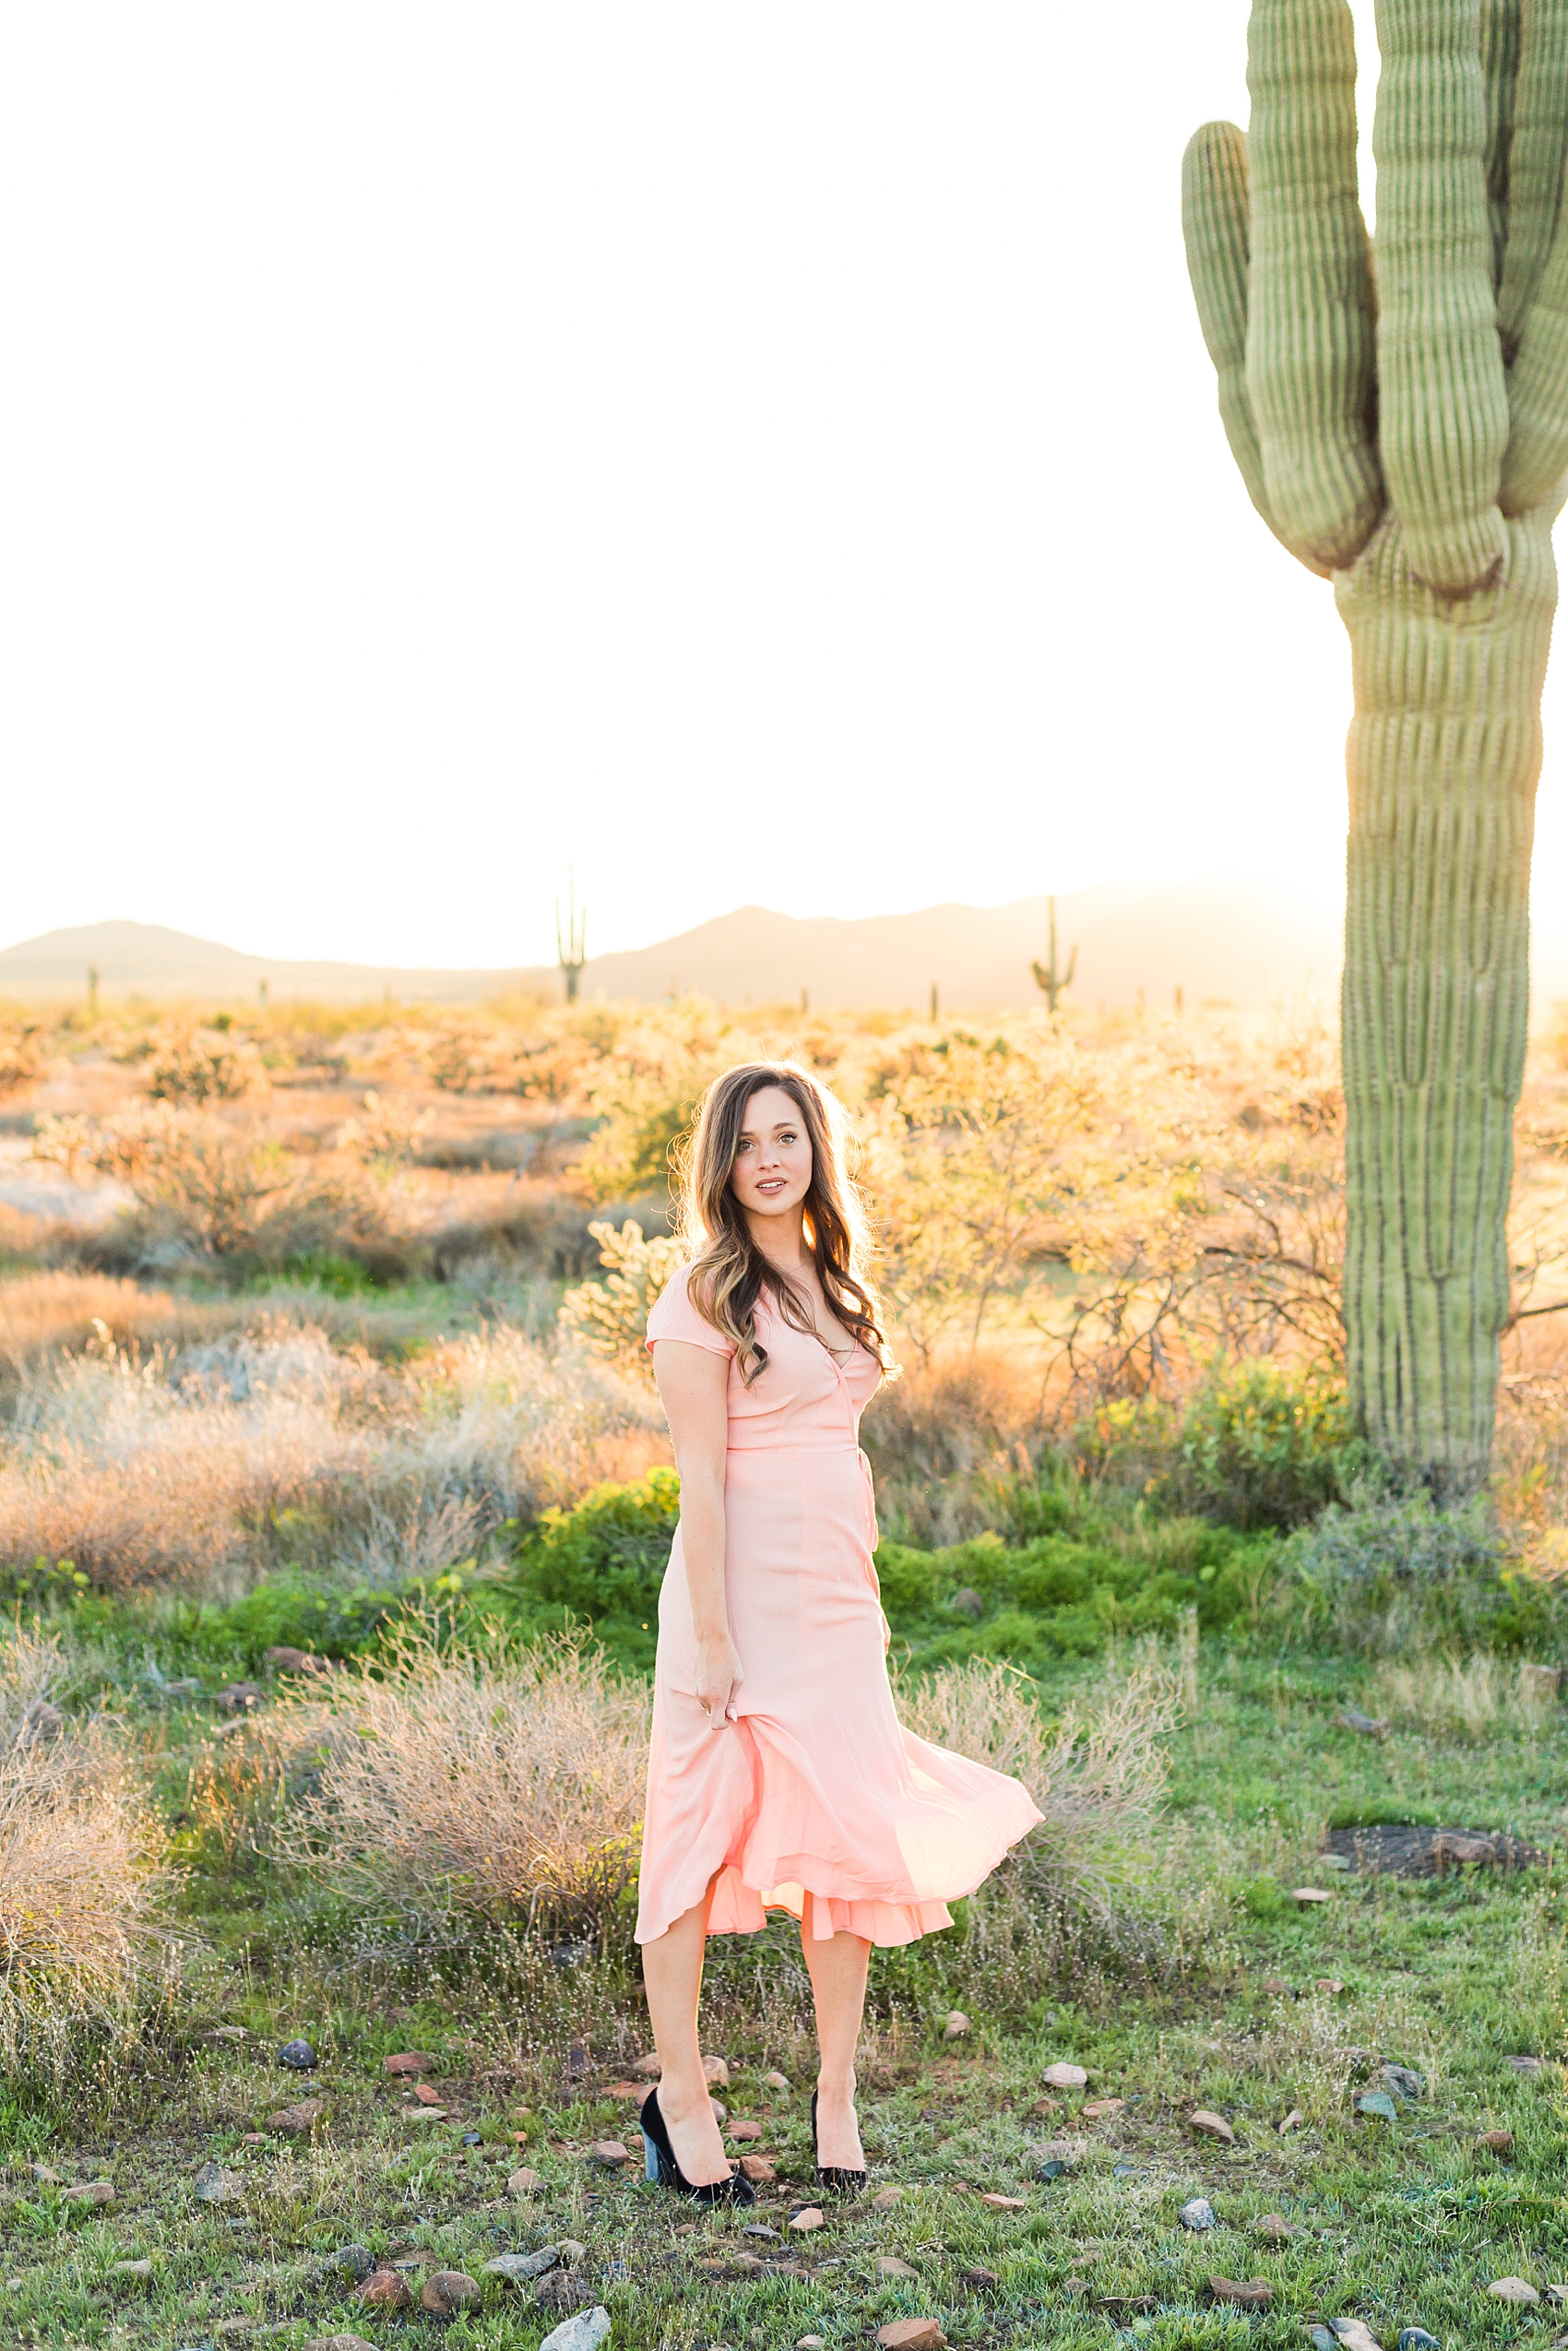 Leah Hope Photography | Scottsdale Phoenix Arizona | Desert Landscape Cactus Scenery | Apache Trailhead | Family Pictures | Child Portraits | Family Photography | What to Wear Families